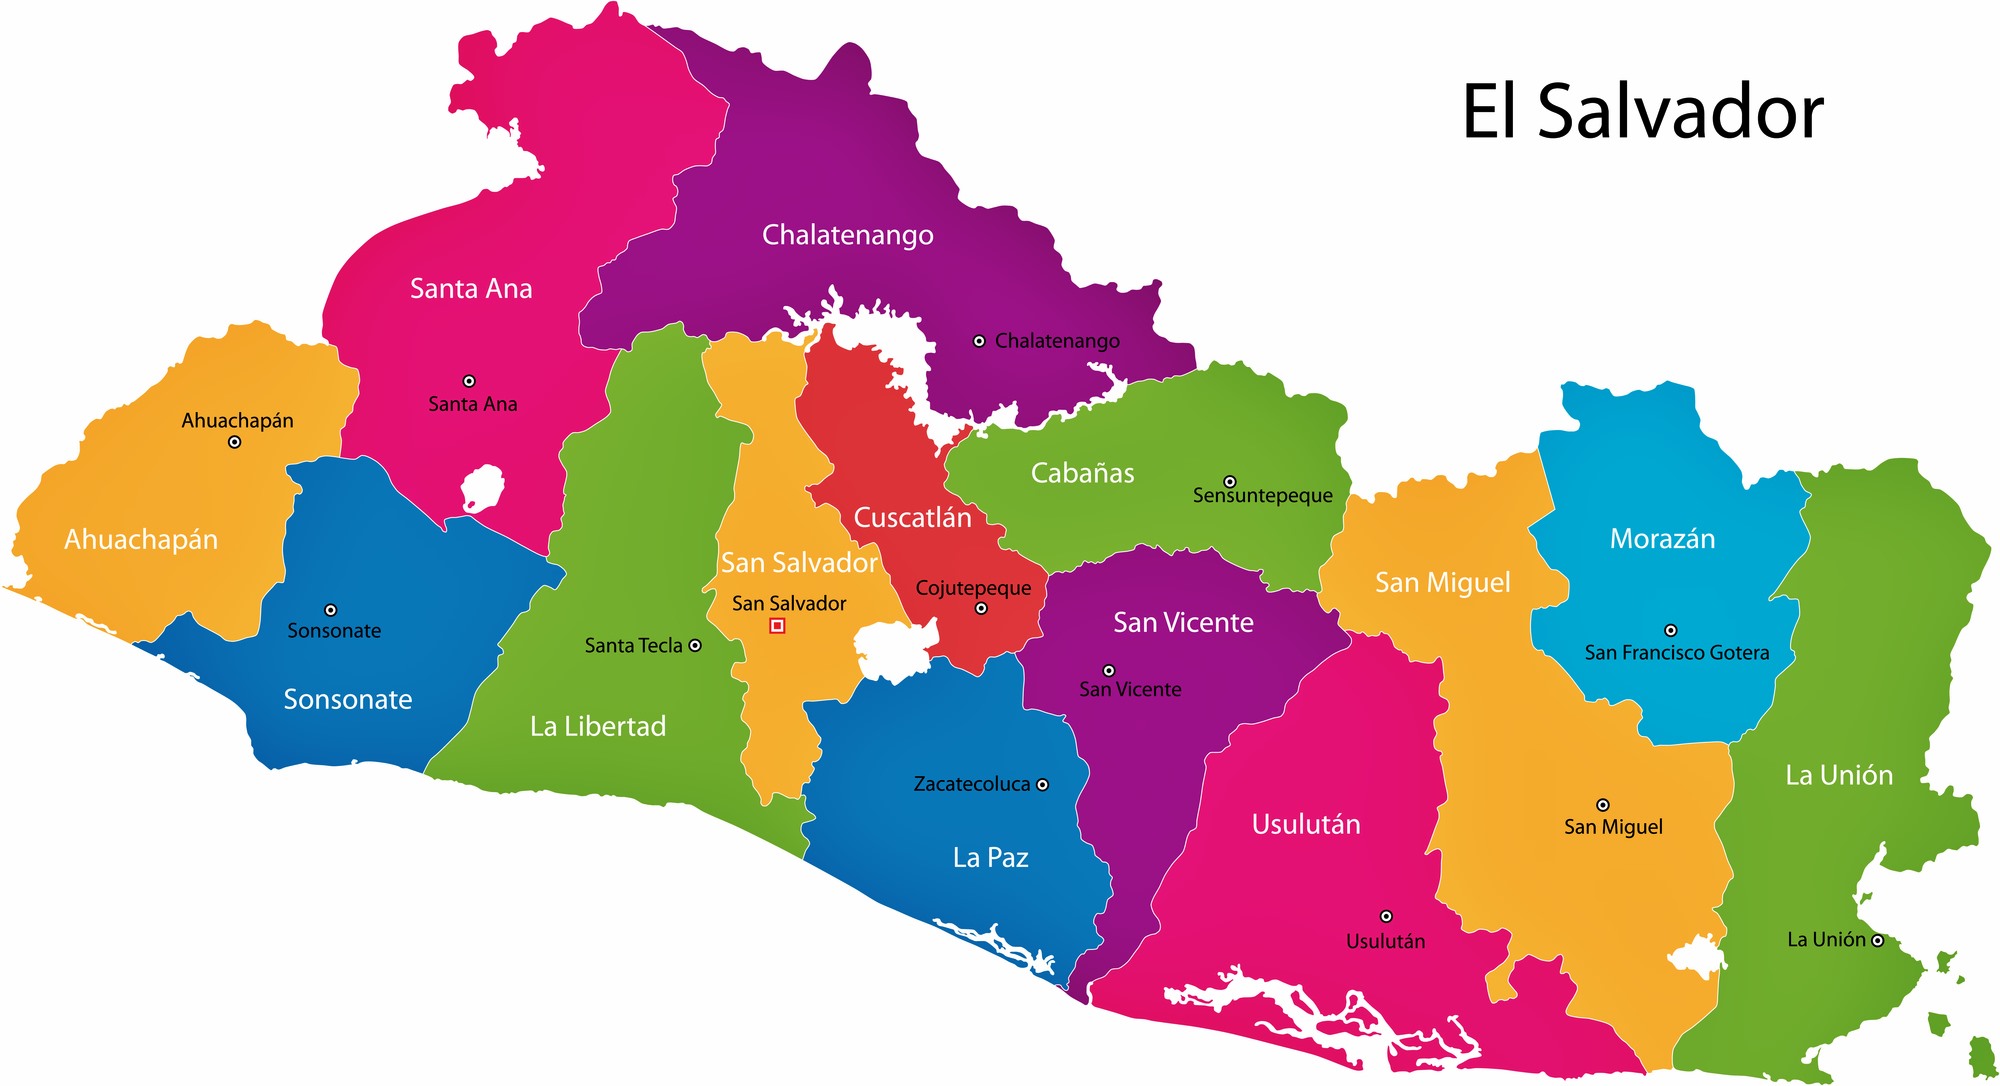 El Salvador Map of Regions and Provinces - OrangeSmile.com